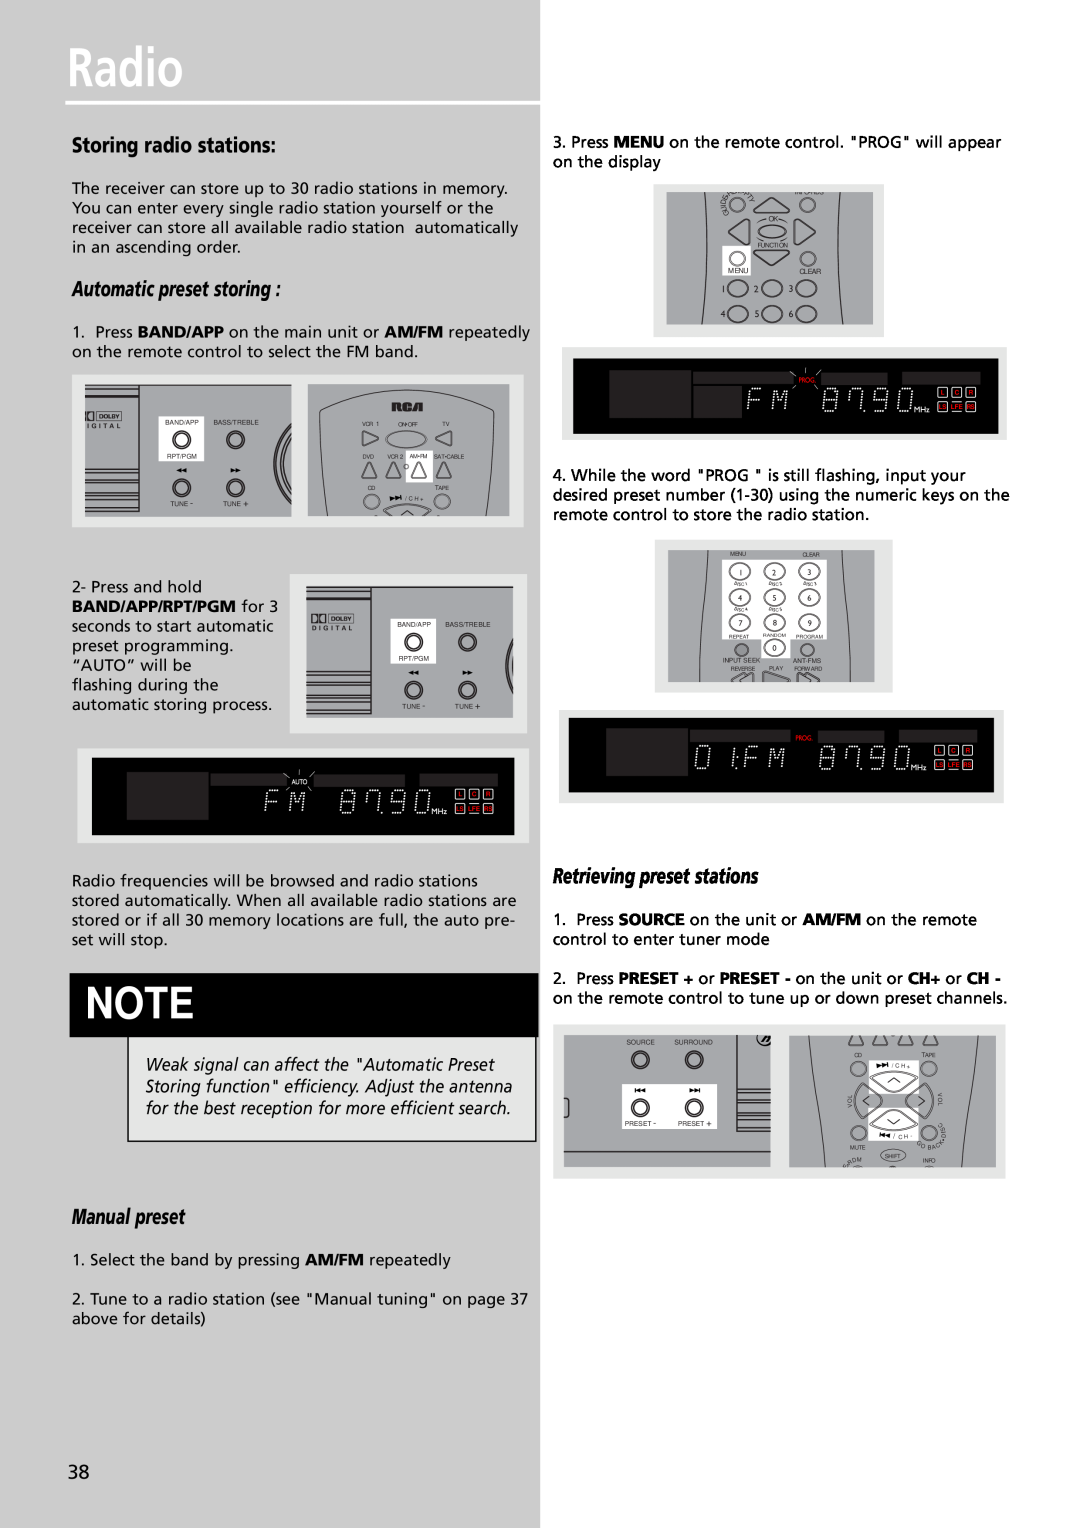 RCA RTDVD1 user manual Storing radio stations, Radio, Automatic preset storing, Manual preset, Retrieving preset stations 